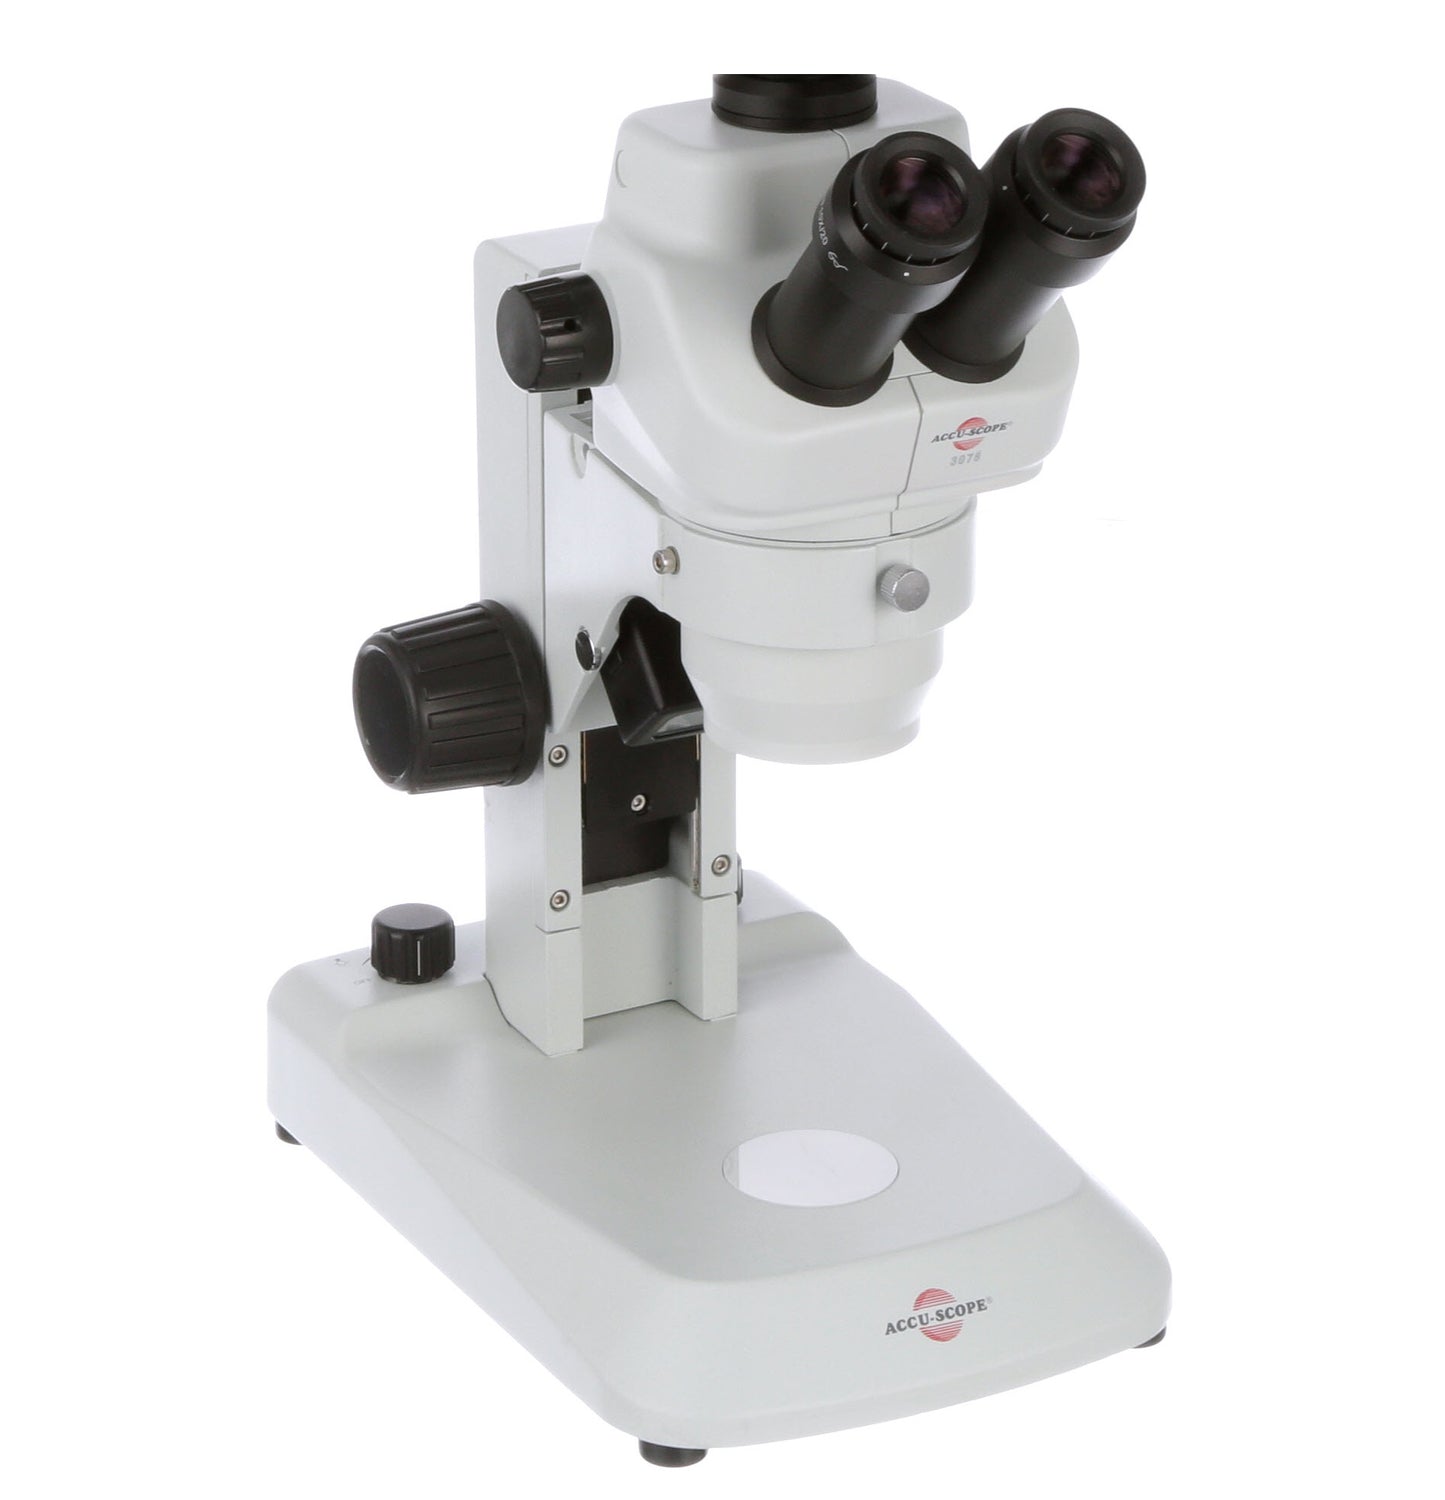 Accu-Scope 3079-LED Microscope